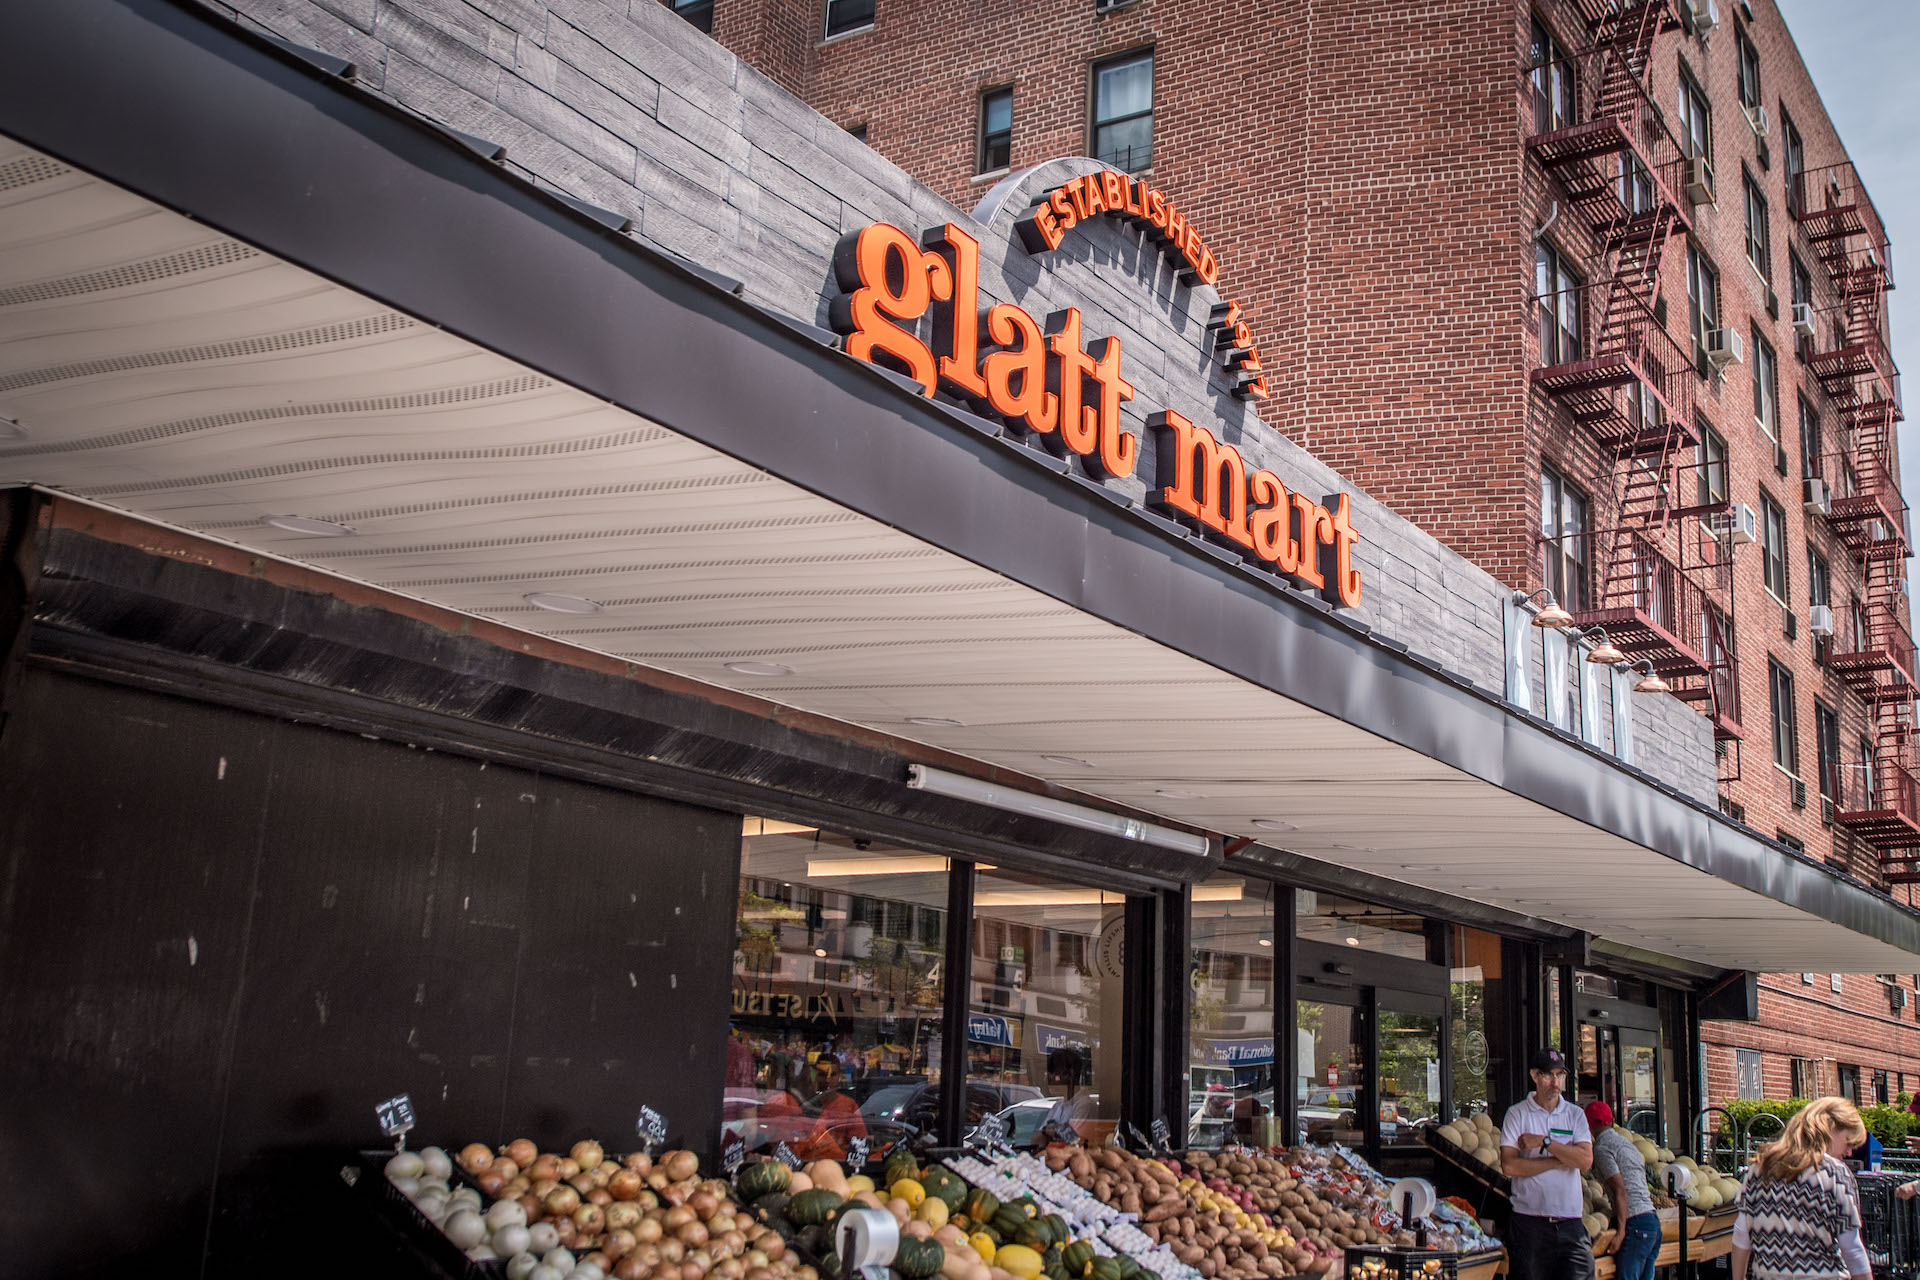 Neighborhood grocery store near The Vitagraph in Brooklyn, NY